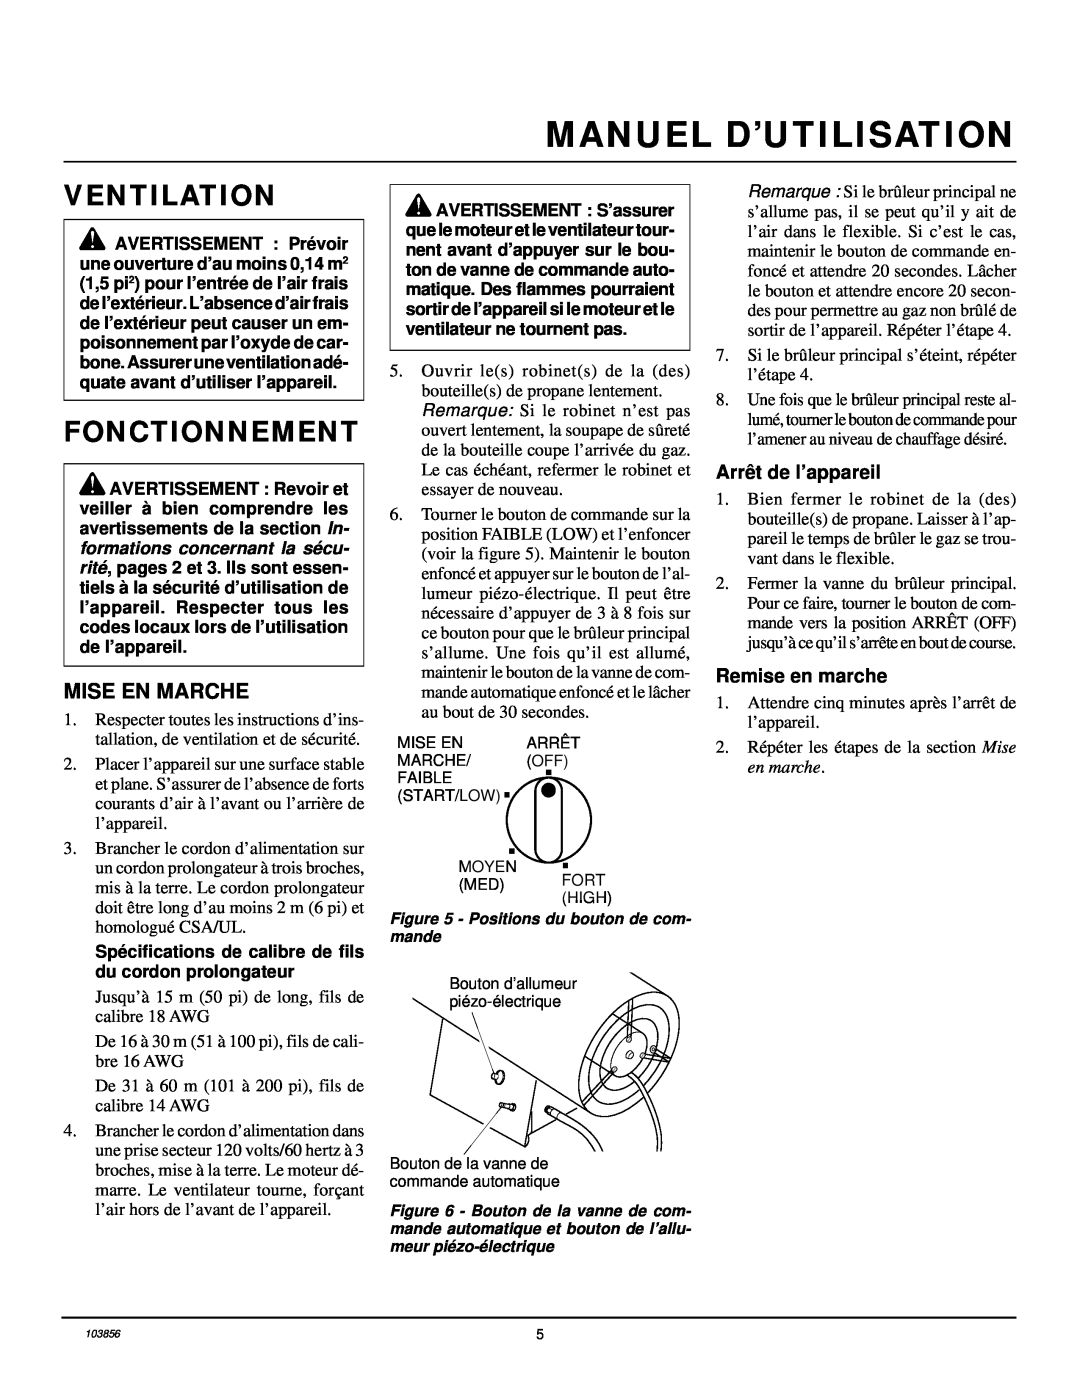 Desa RCLP50V owner manual Fonctionnement, Manuel D’Utilisation, Ventilation, Mise En Marche 